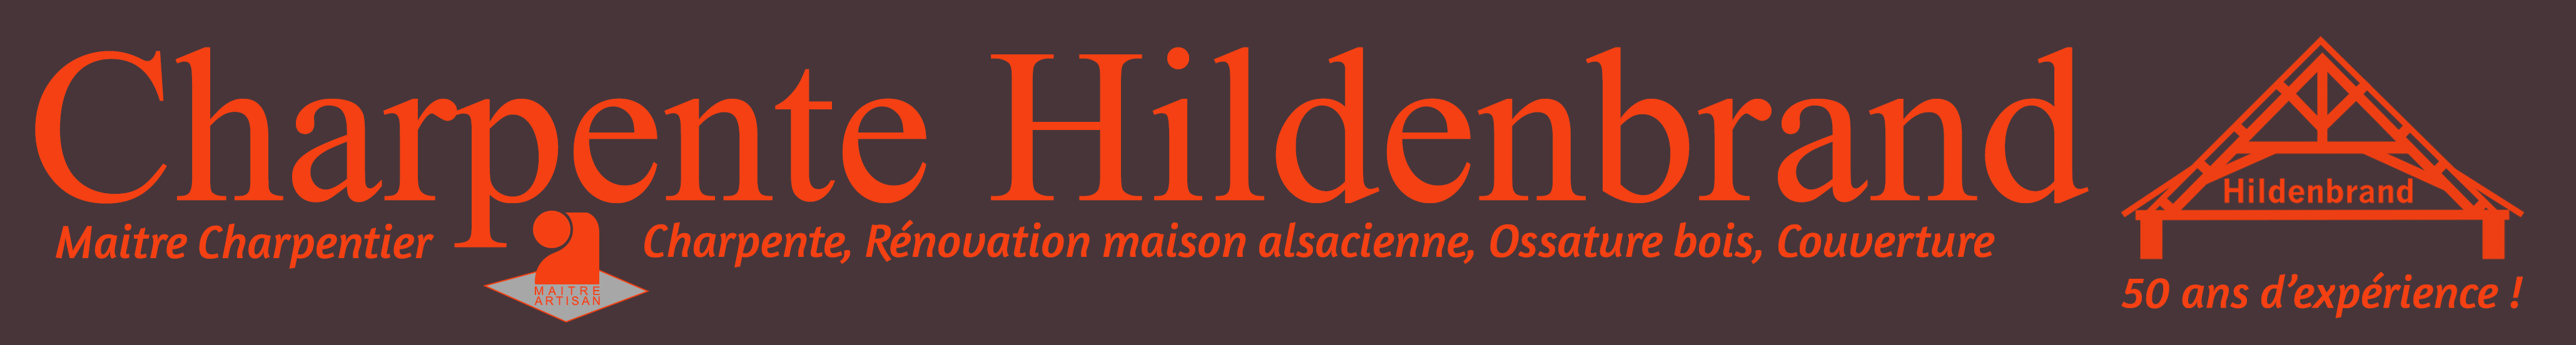 charpente Hildenbrand logo